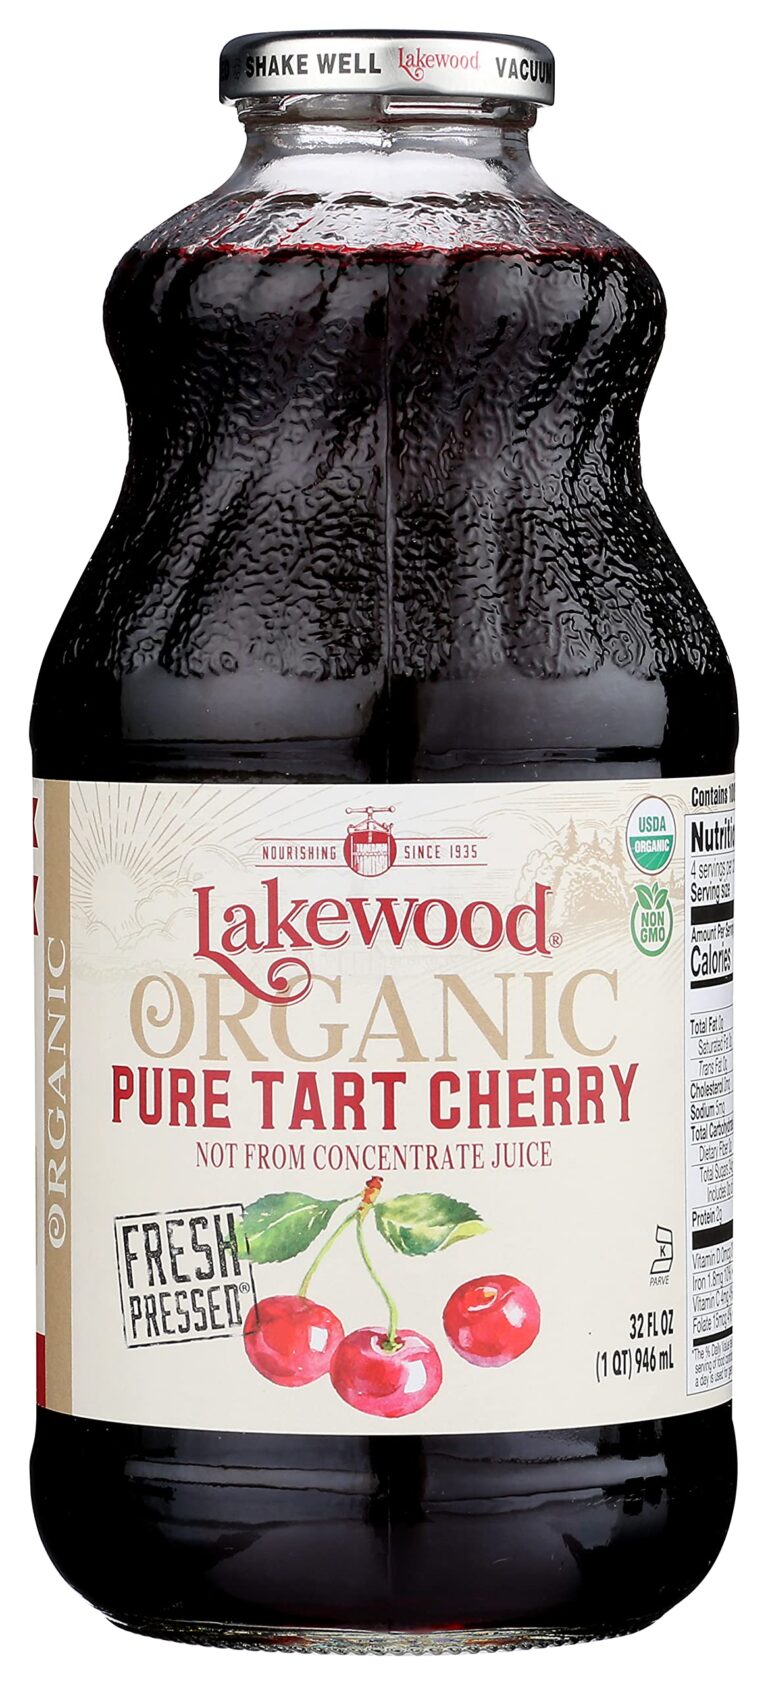 Who Should Not Drink Tart Cherry Juice?